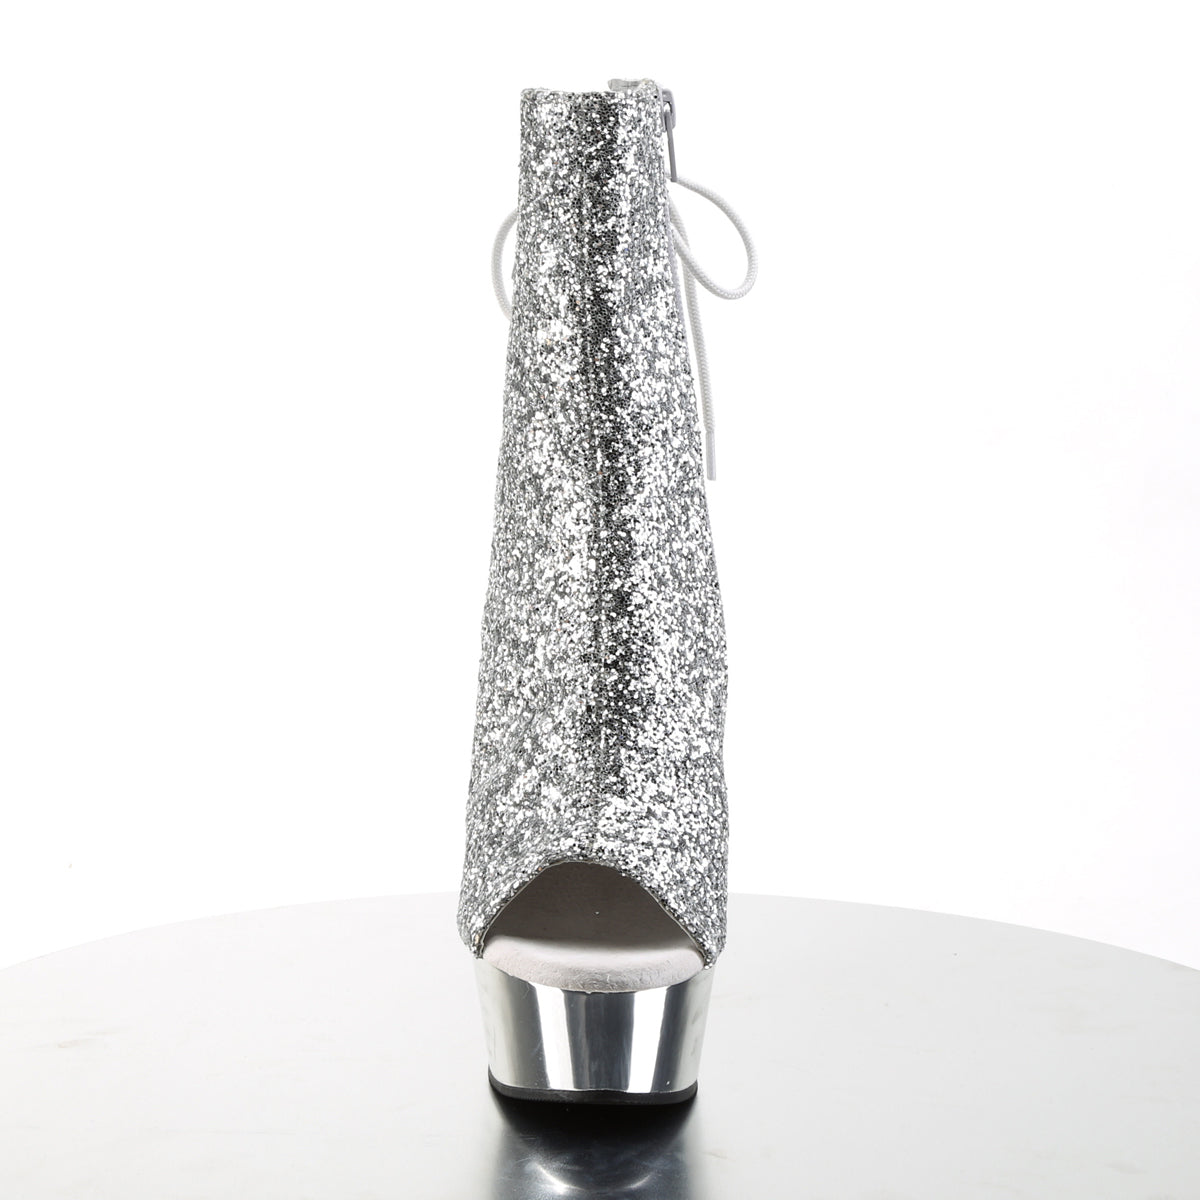 DELIGHT-1018G 6" Heel Silver Glitter Pole Dancing Platforms-Pleaser- Sexy Shoes Alternative Footwear